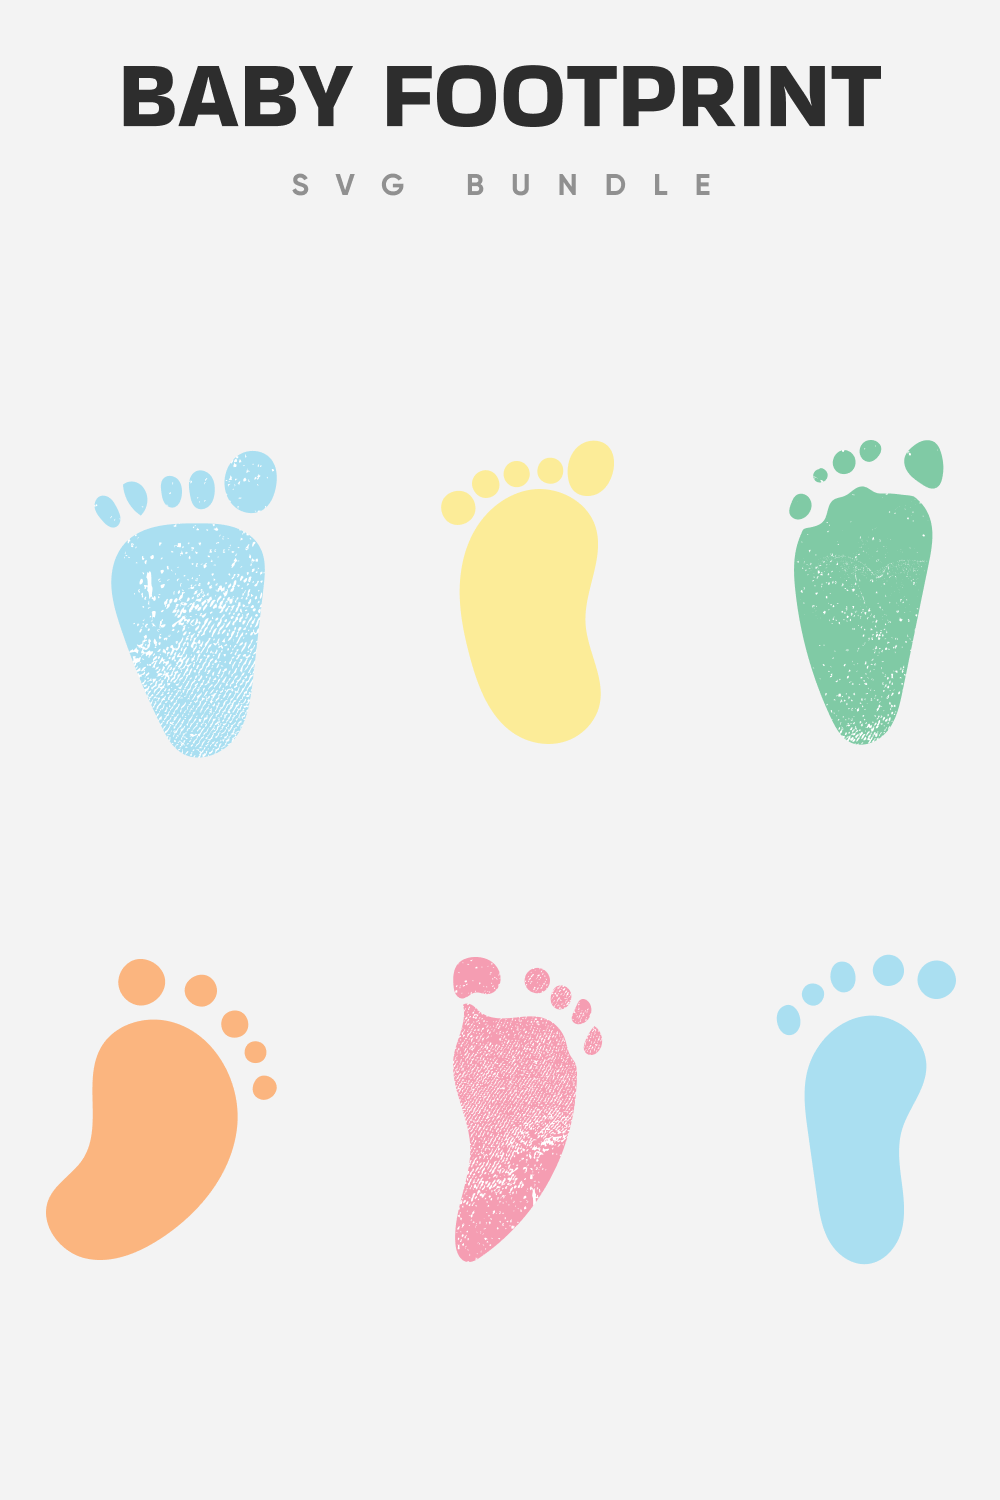 Cute colorful baby footprint.